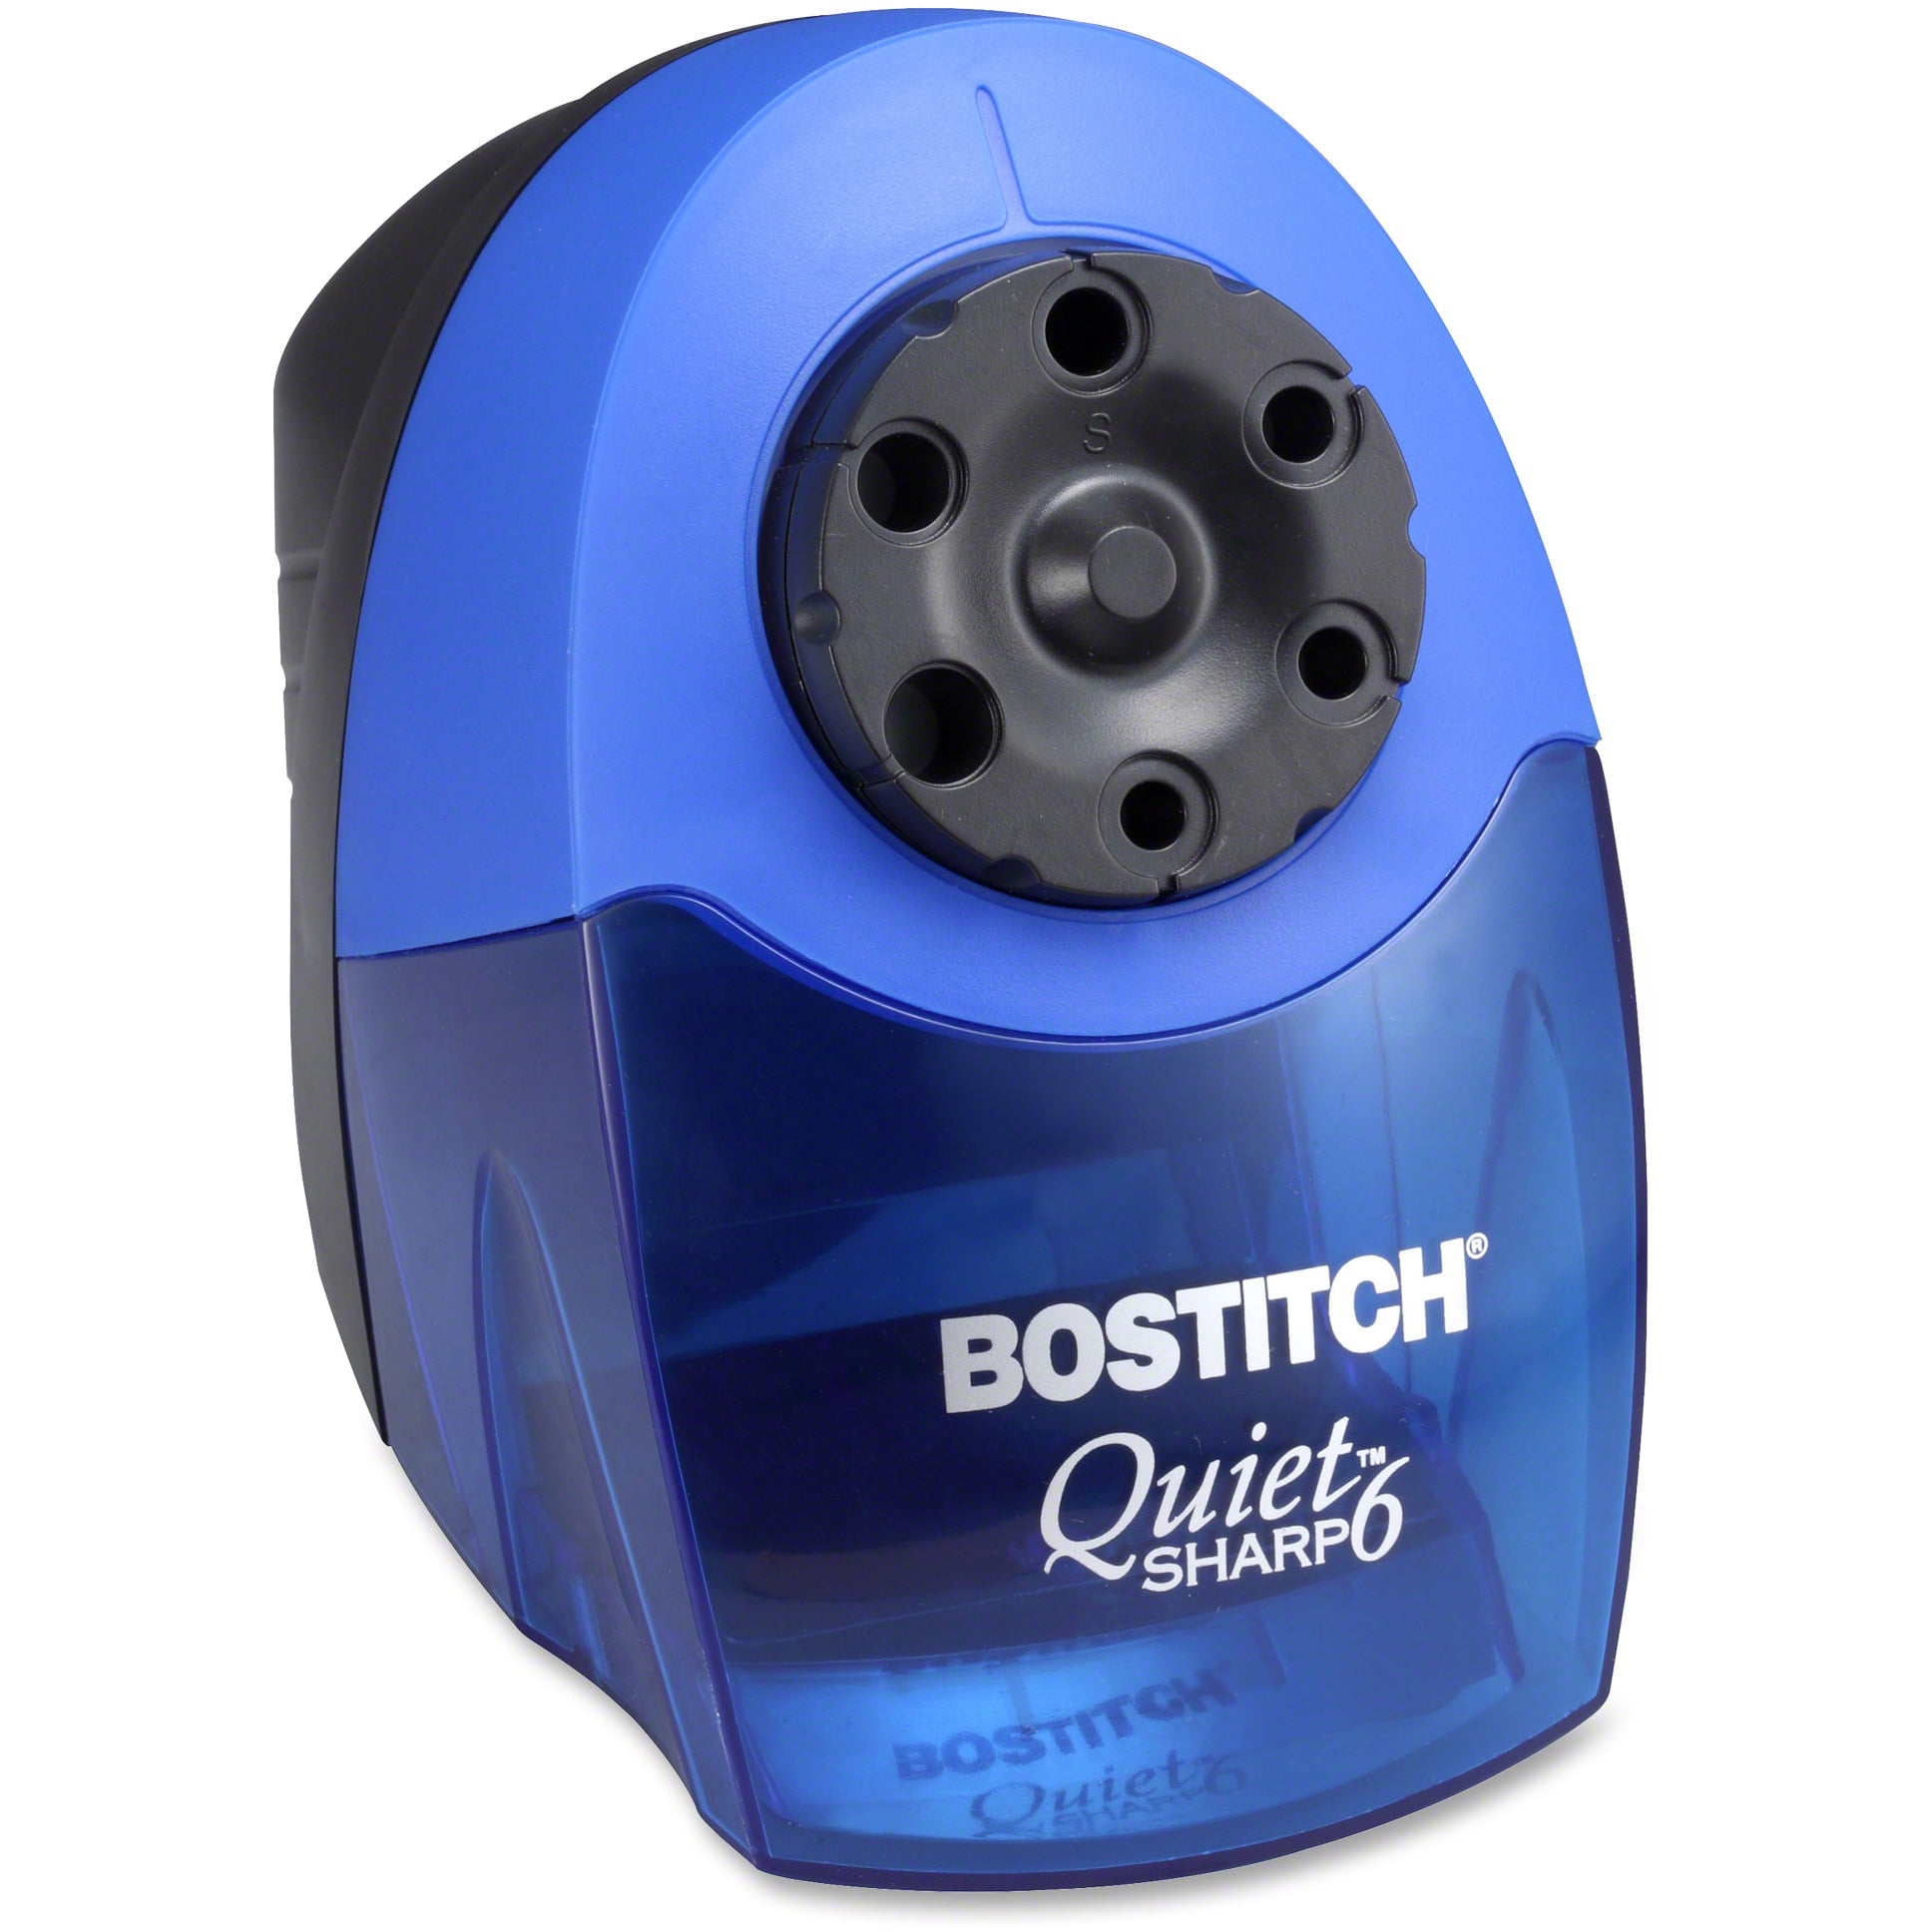 BOSTITCH Quietsharp 6 Classroom Electric Pencil Sharpener, Blue - image 1 of 9